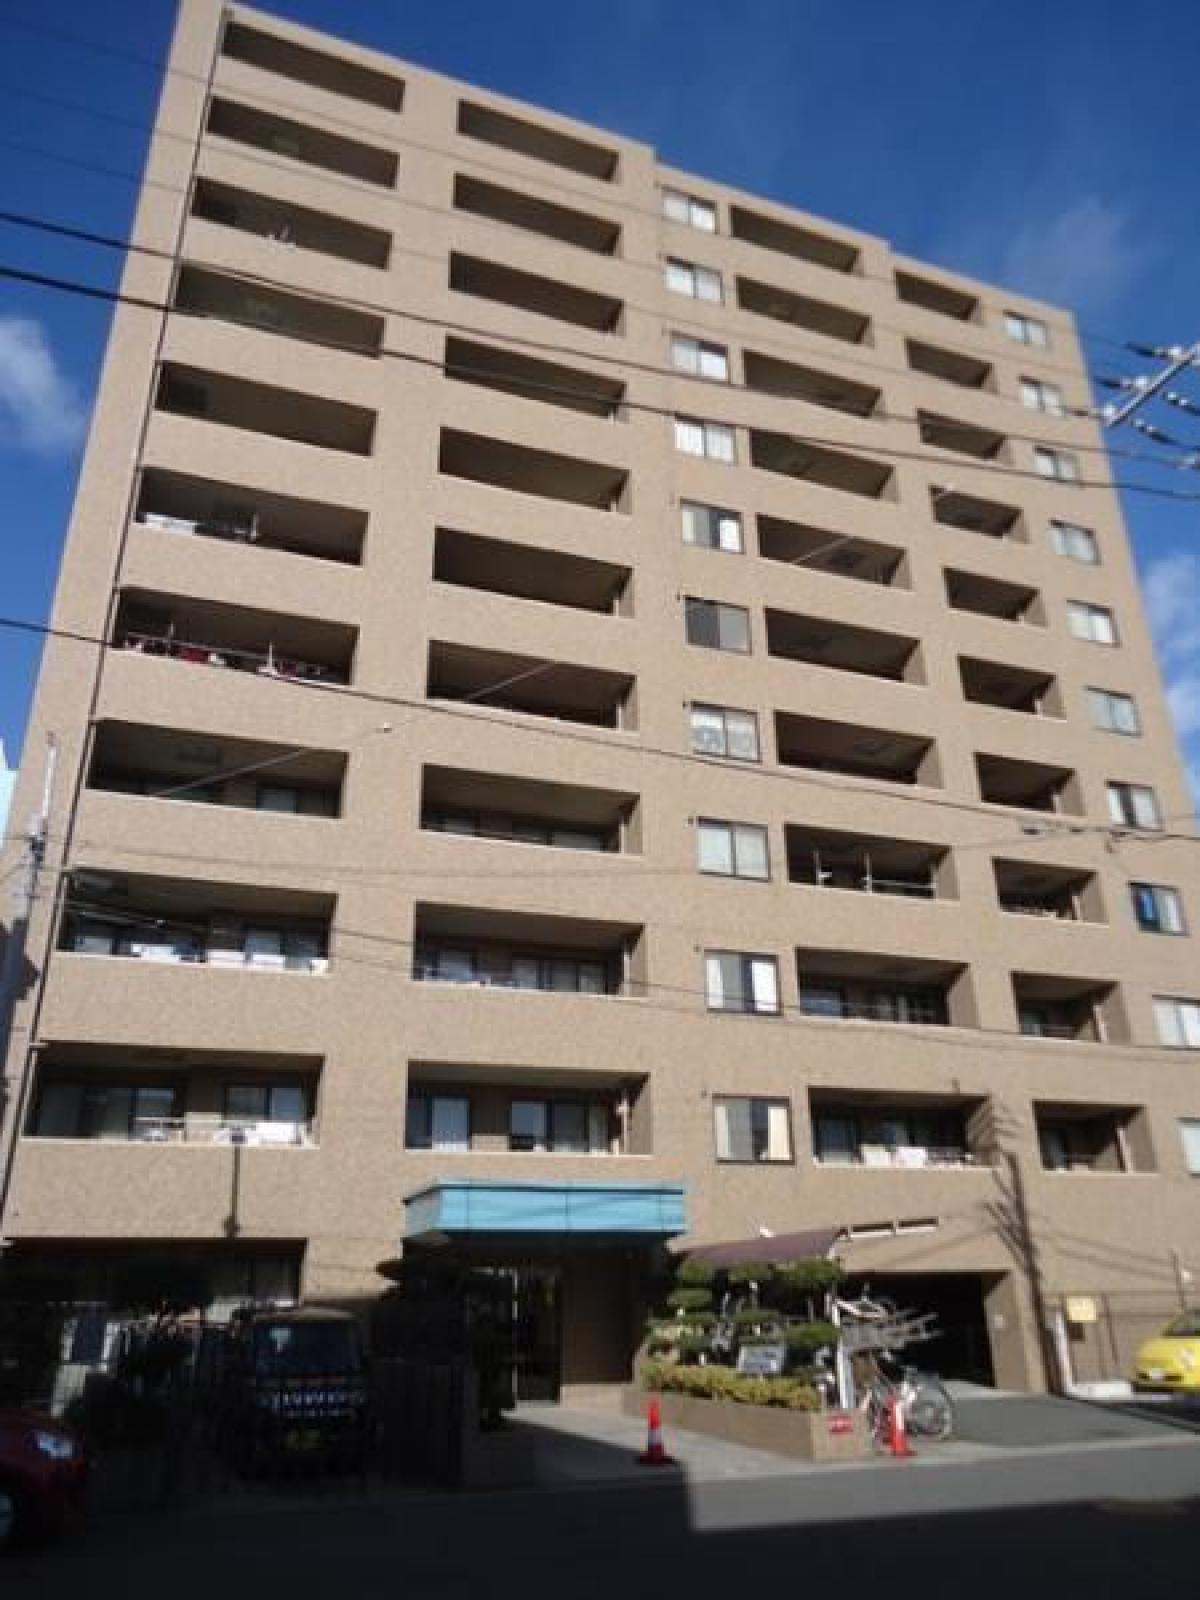 Picture of Apartment For Sale in Yokosuka Shi, Kanagawa, Japan